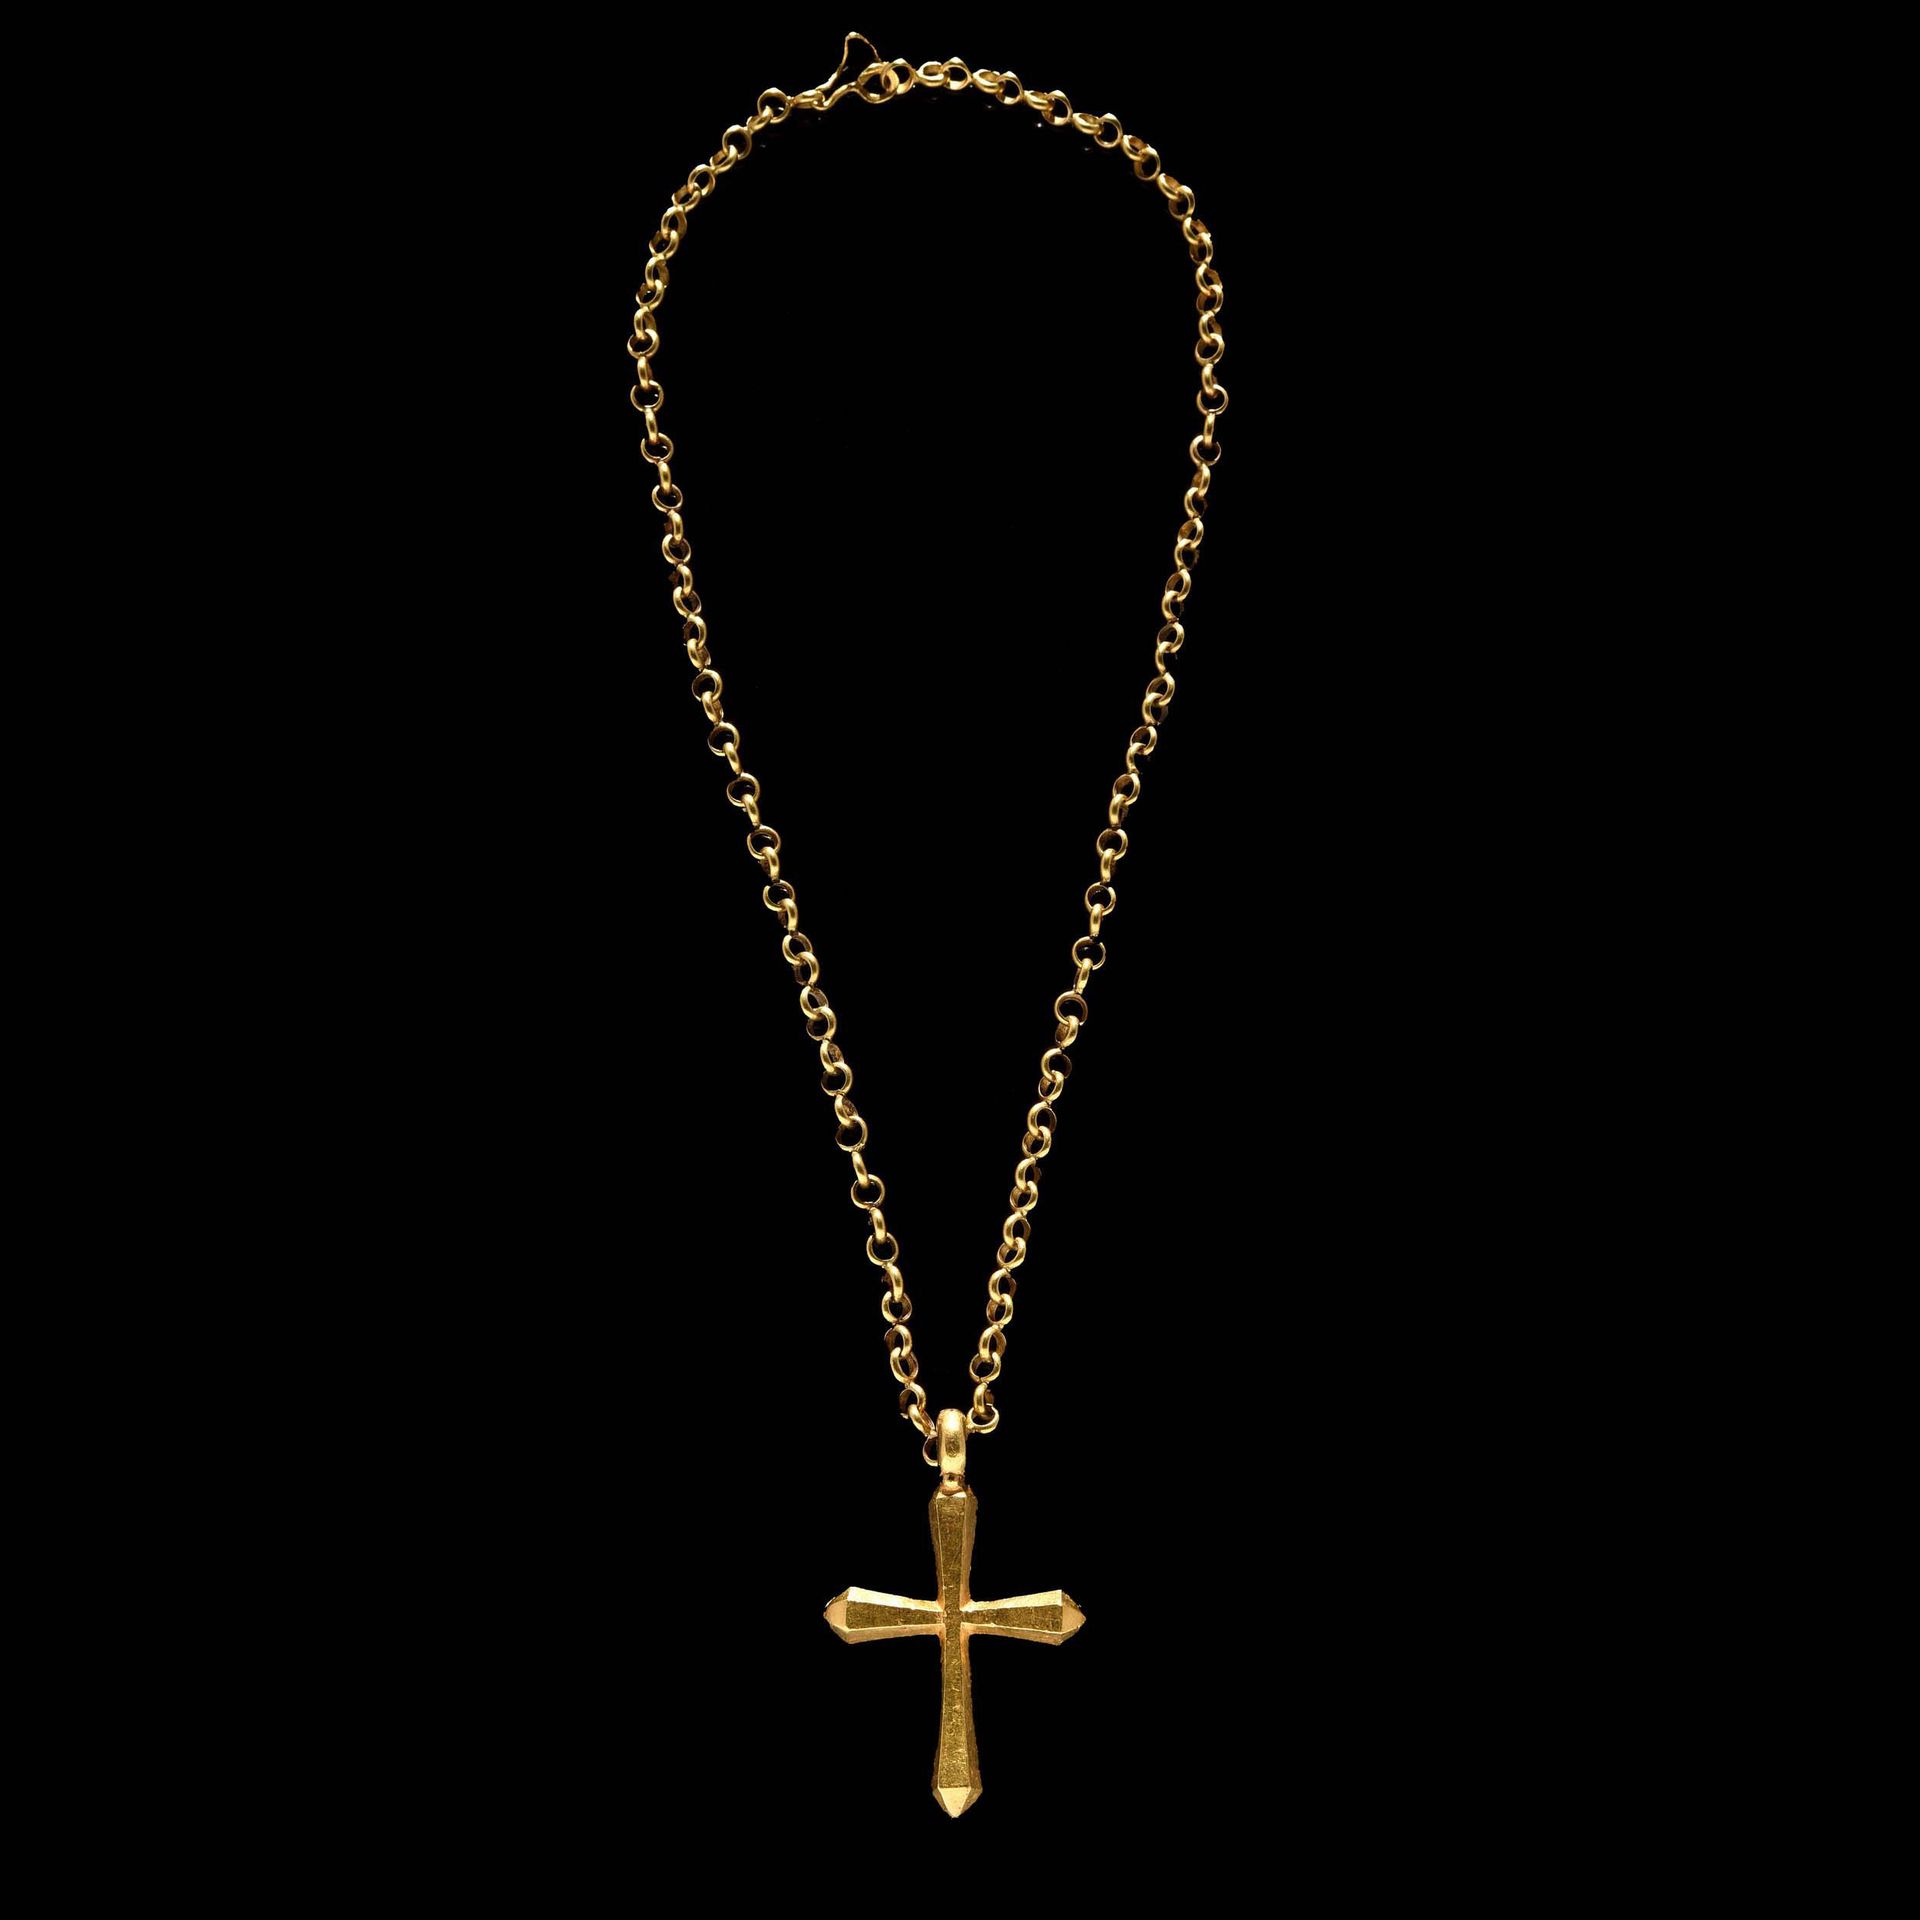 Null 项链

拜占庭艺术，6-7世纪。

黄金，有一个十字架形式的纯金吊坠。

保存得非常好。

尺寸（十字）32x49毫米；48克

出处

前私人收藏，&hellip;